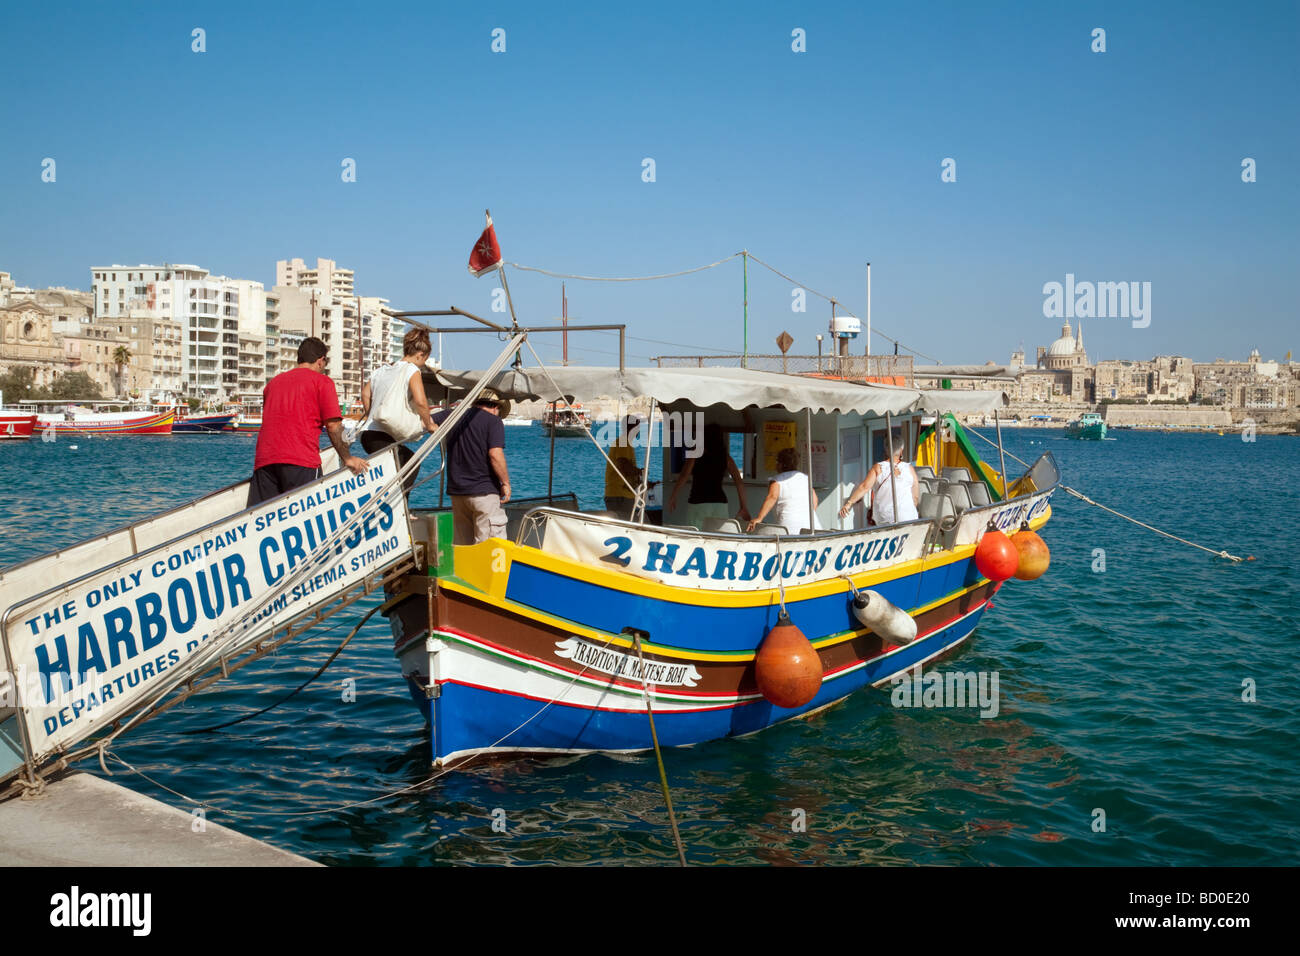 Tourists boarding a luzzu (traditional maltese boat) for a cruise round the harbour, Sliema, Valletta, Malta Stock Photo